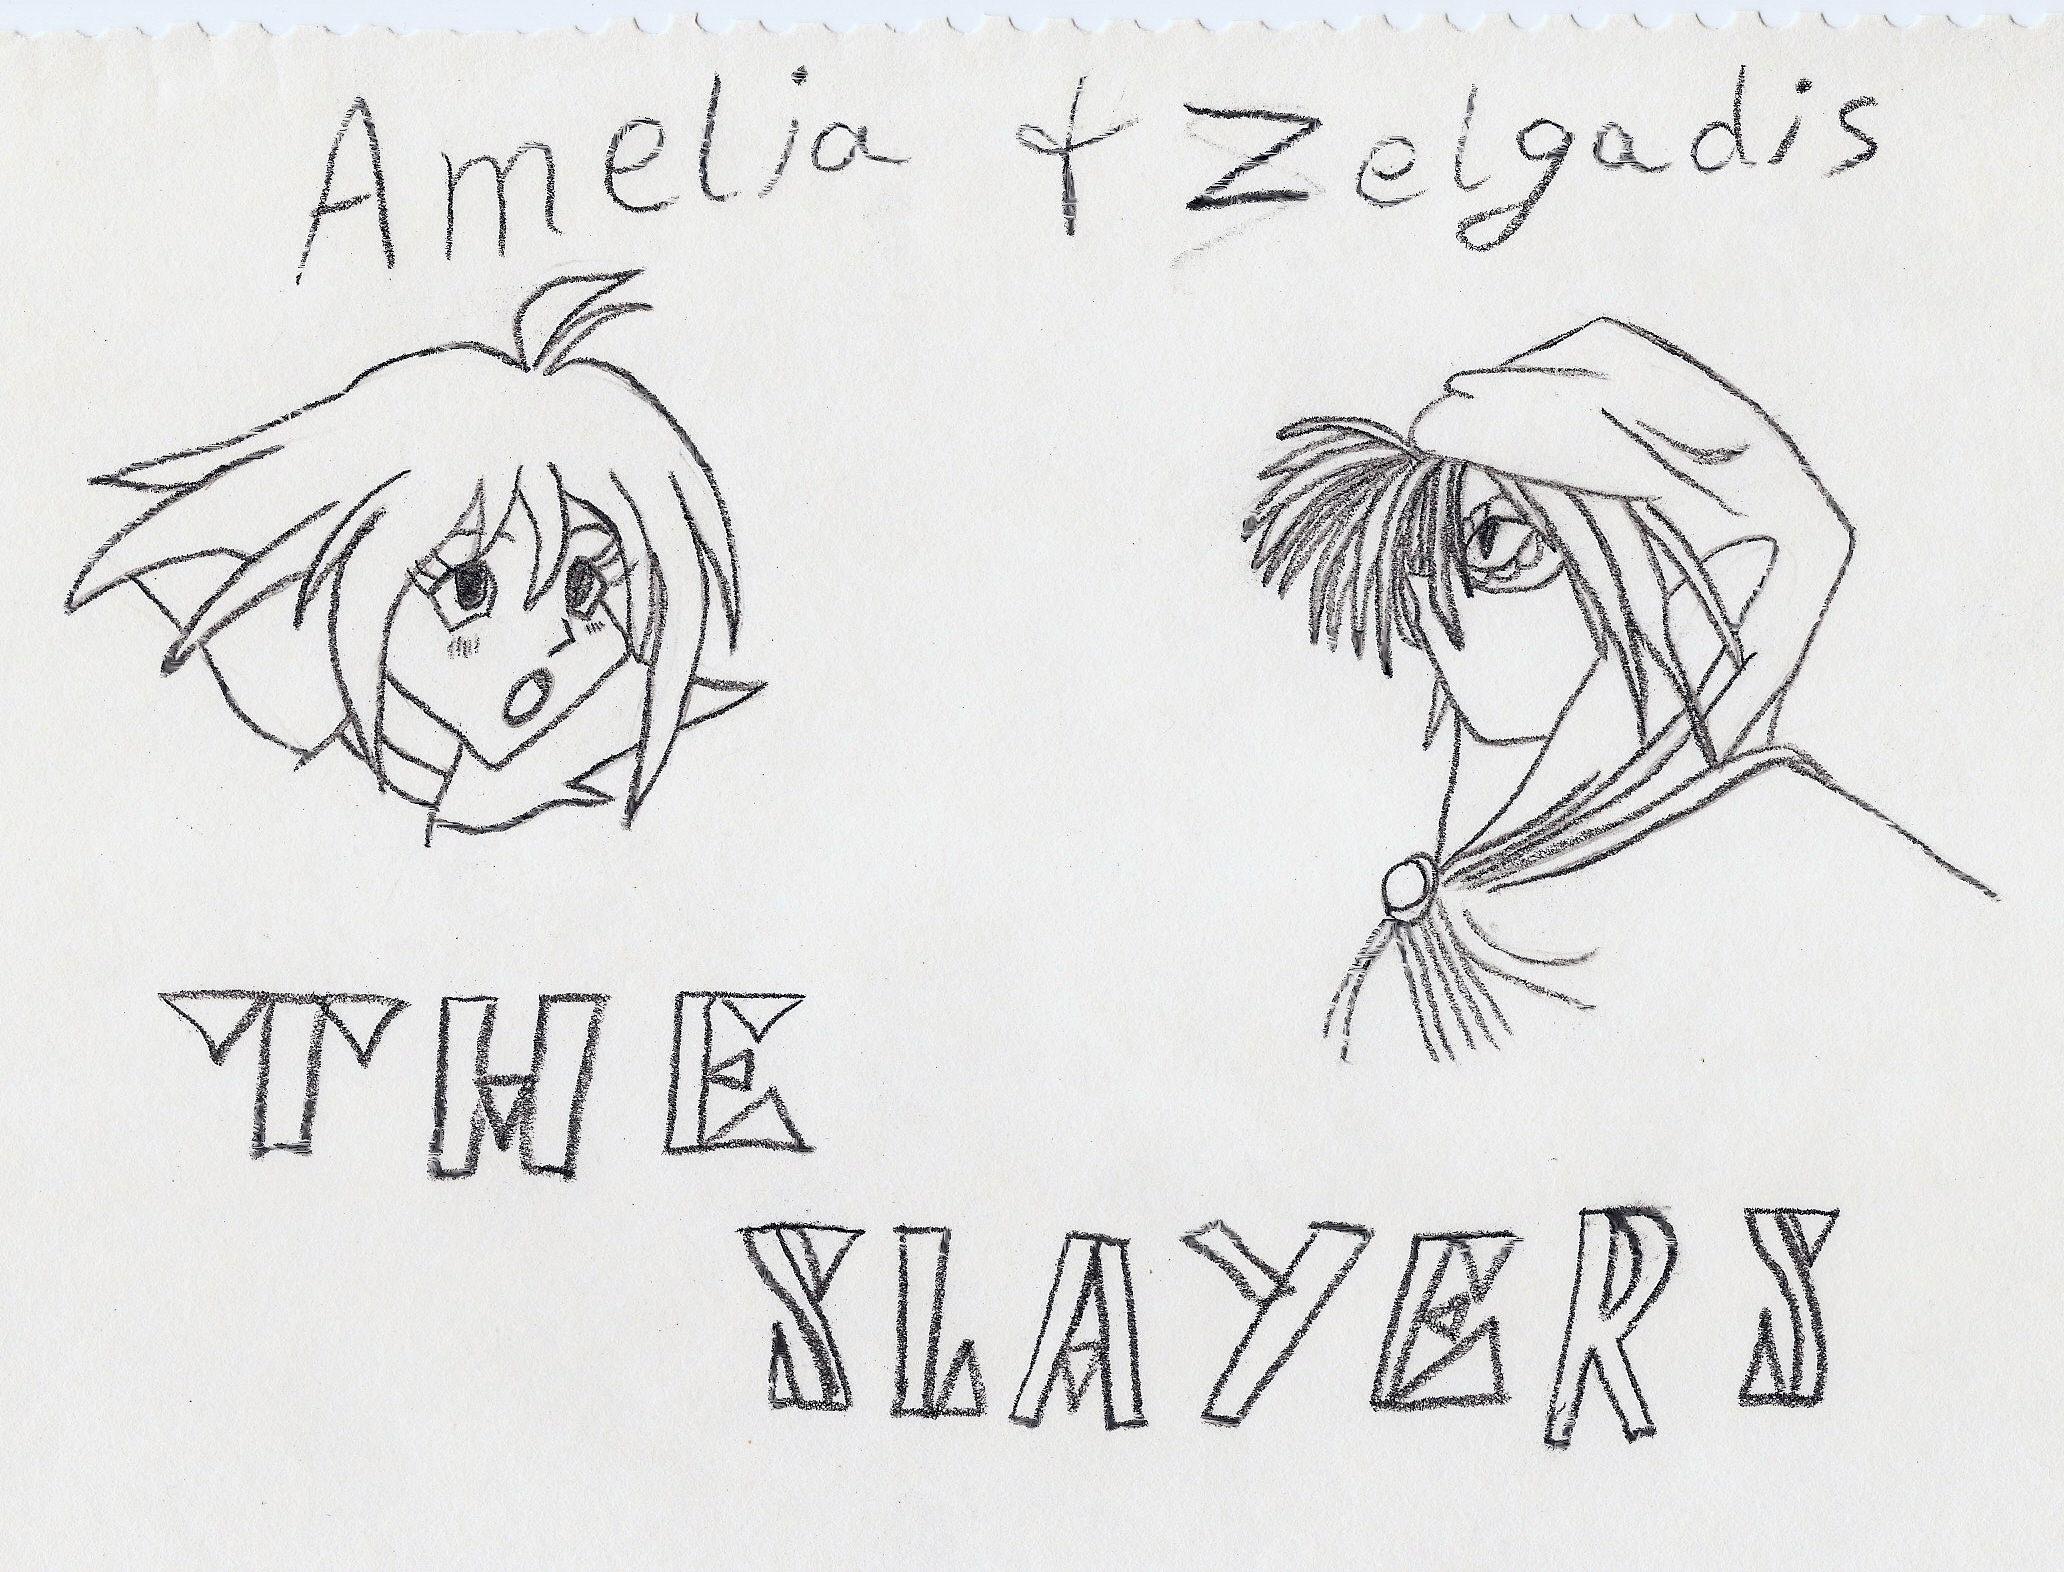 Zelgadis and Amelia by dragonlove